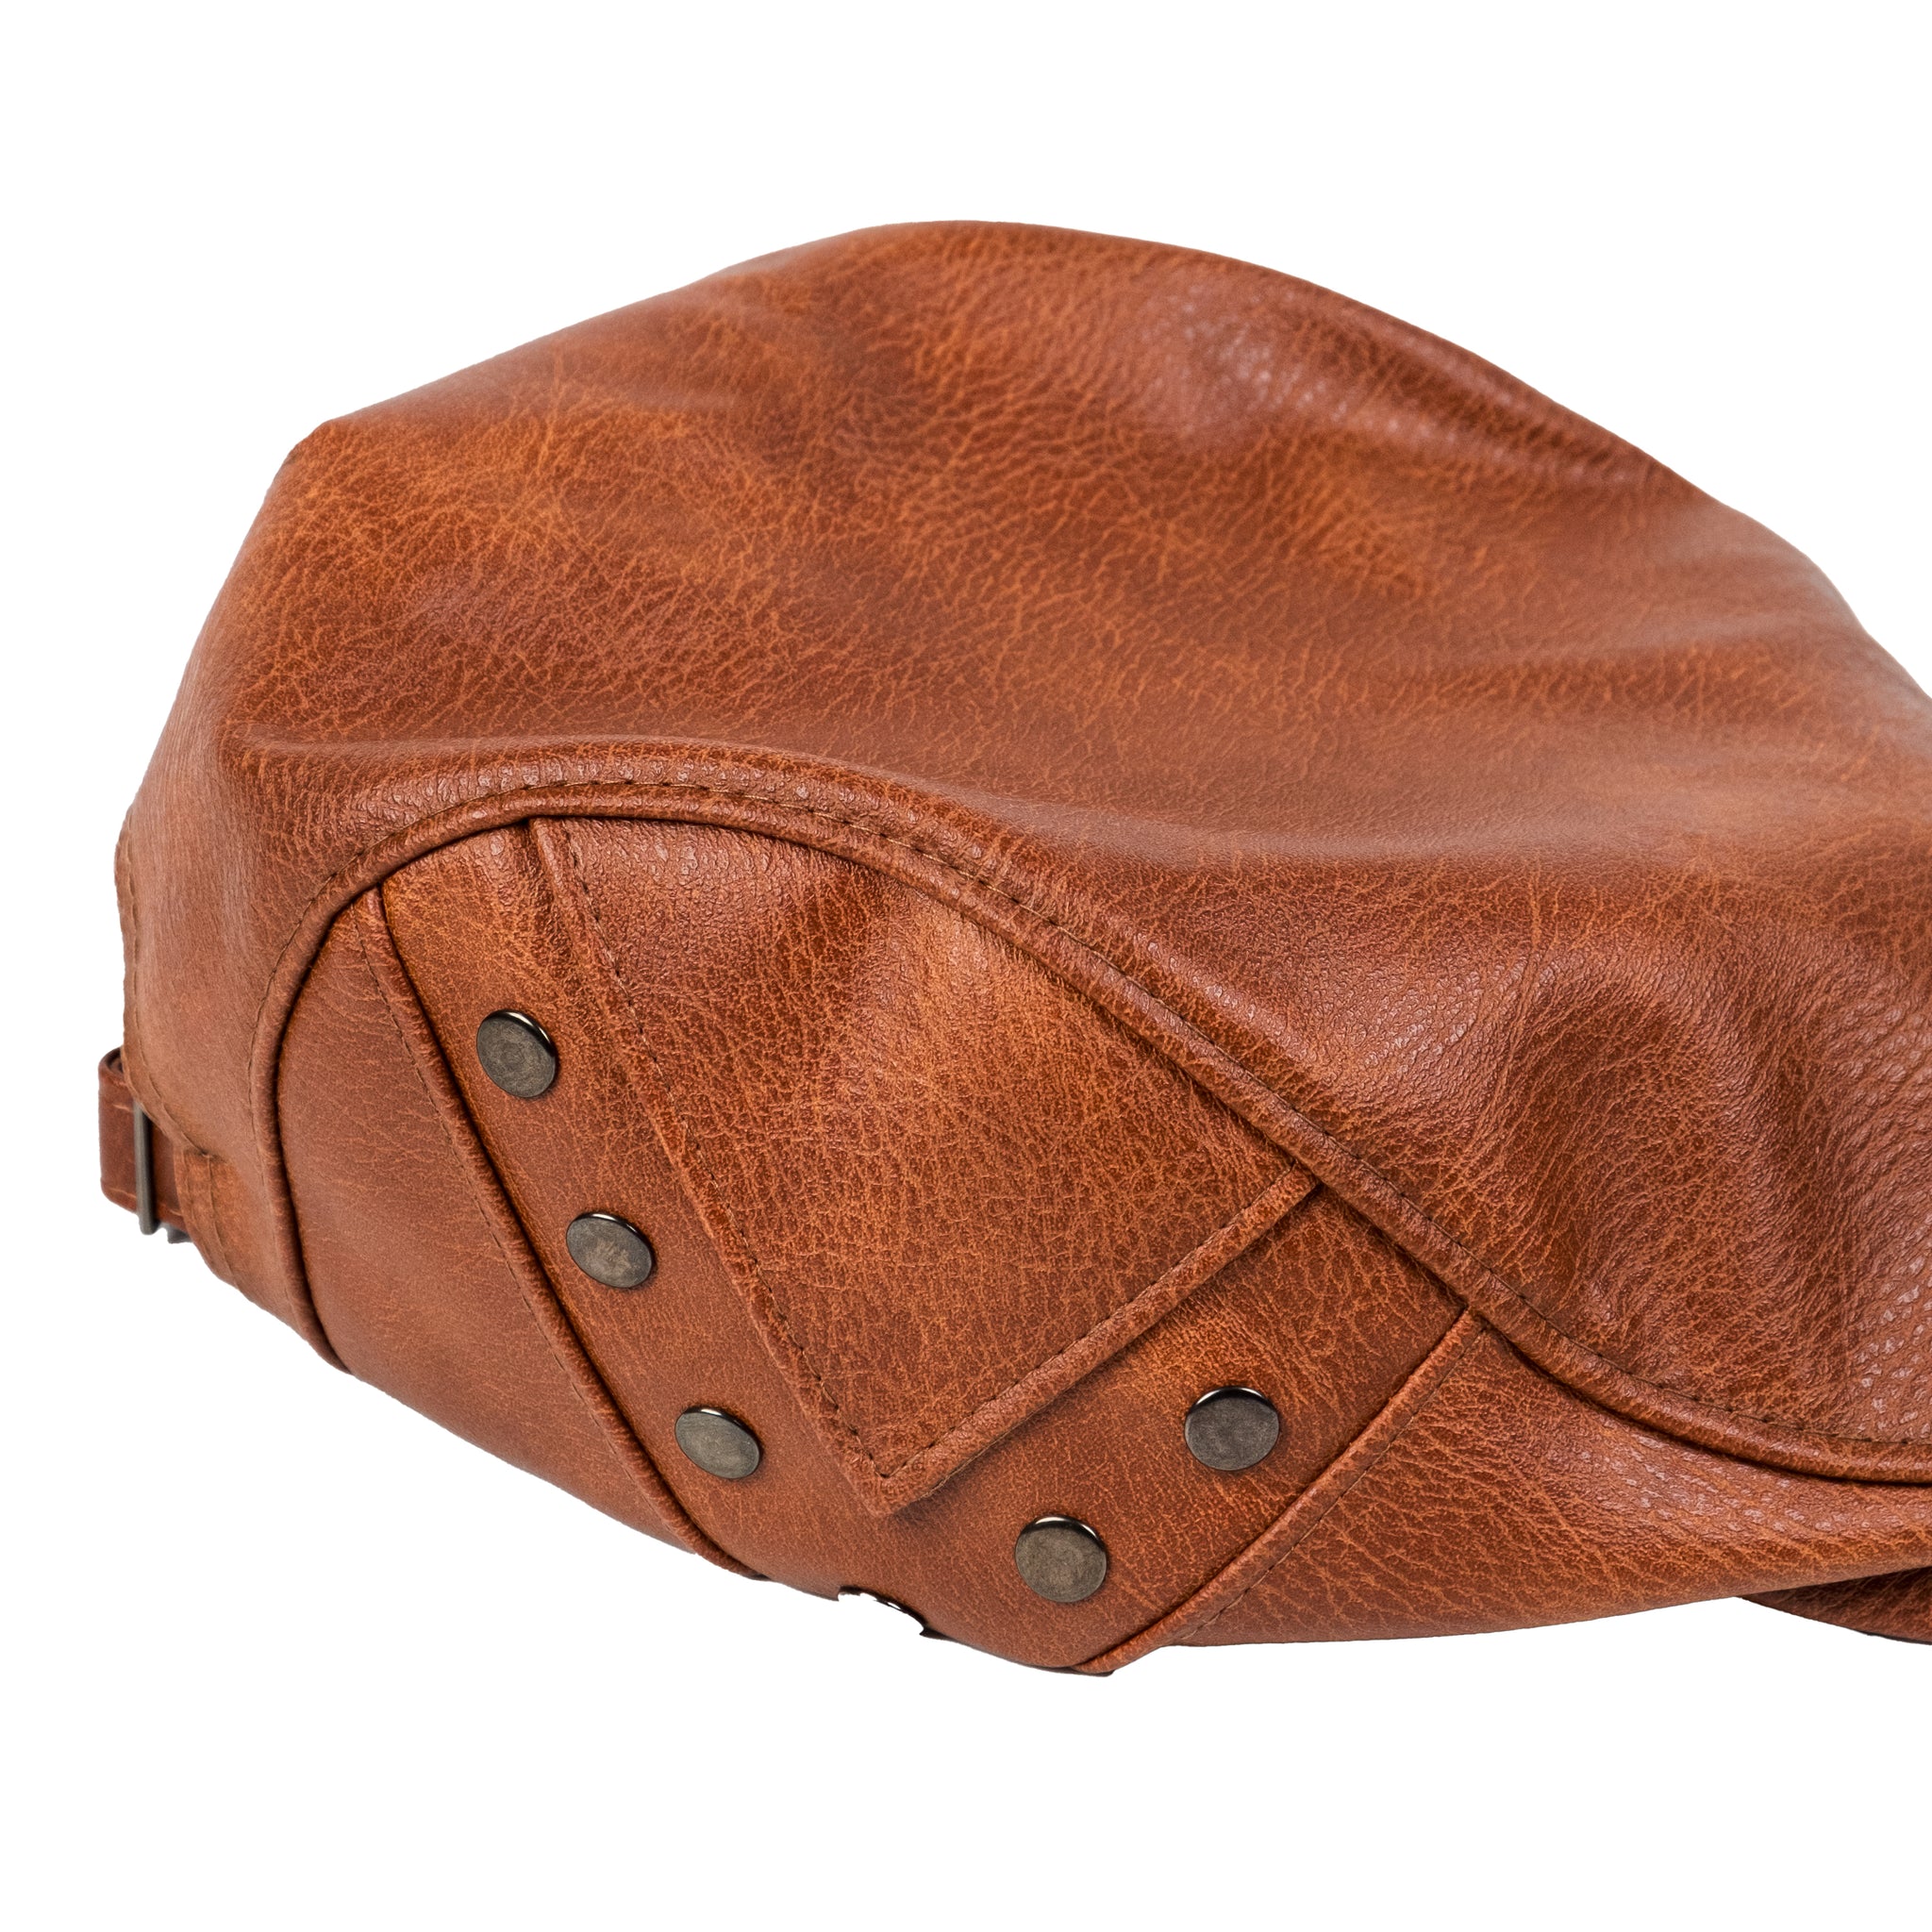 Chokore PU Leather Ivy Cap with Rivet Detailing (Khaki)